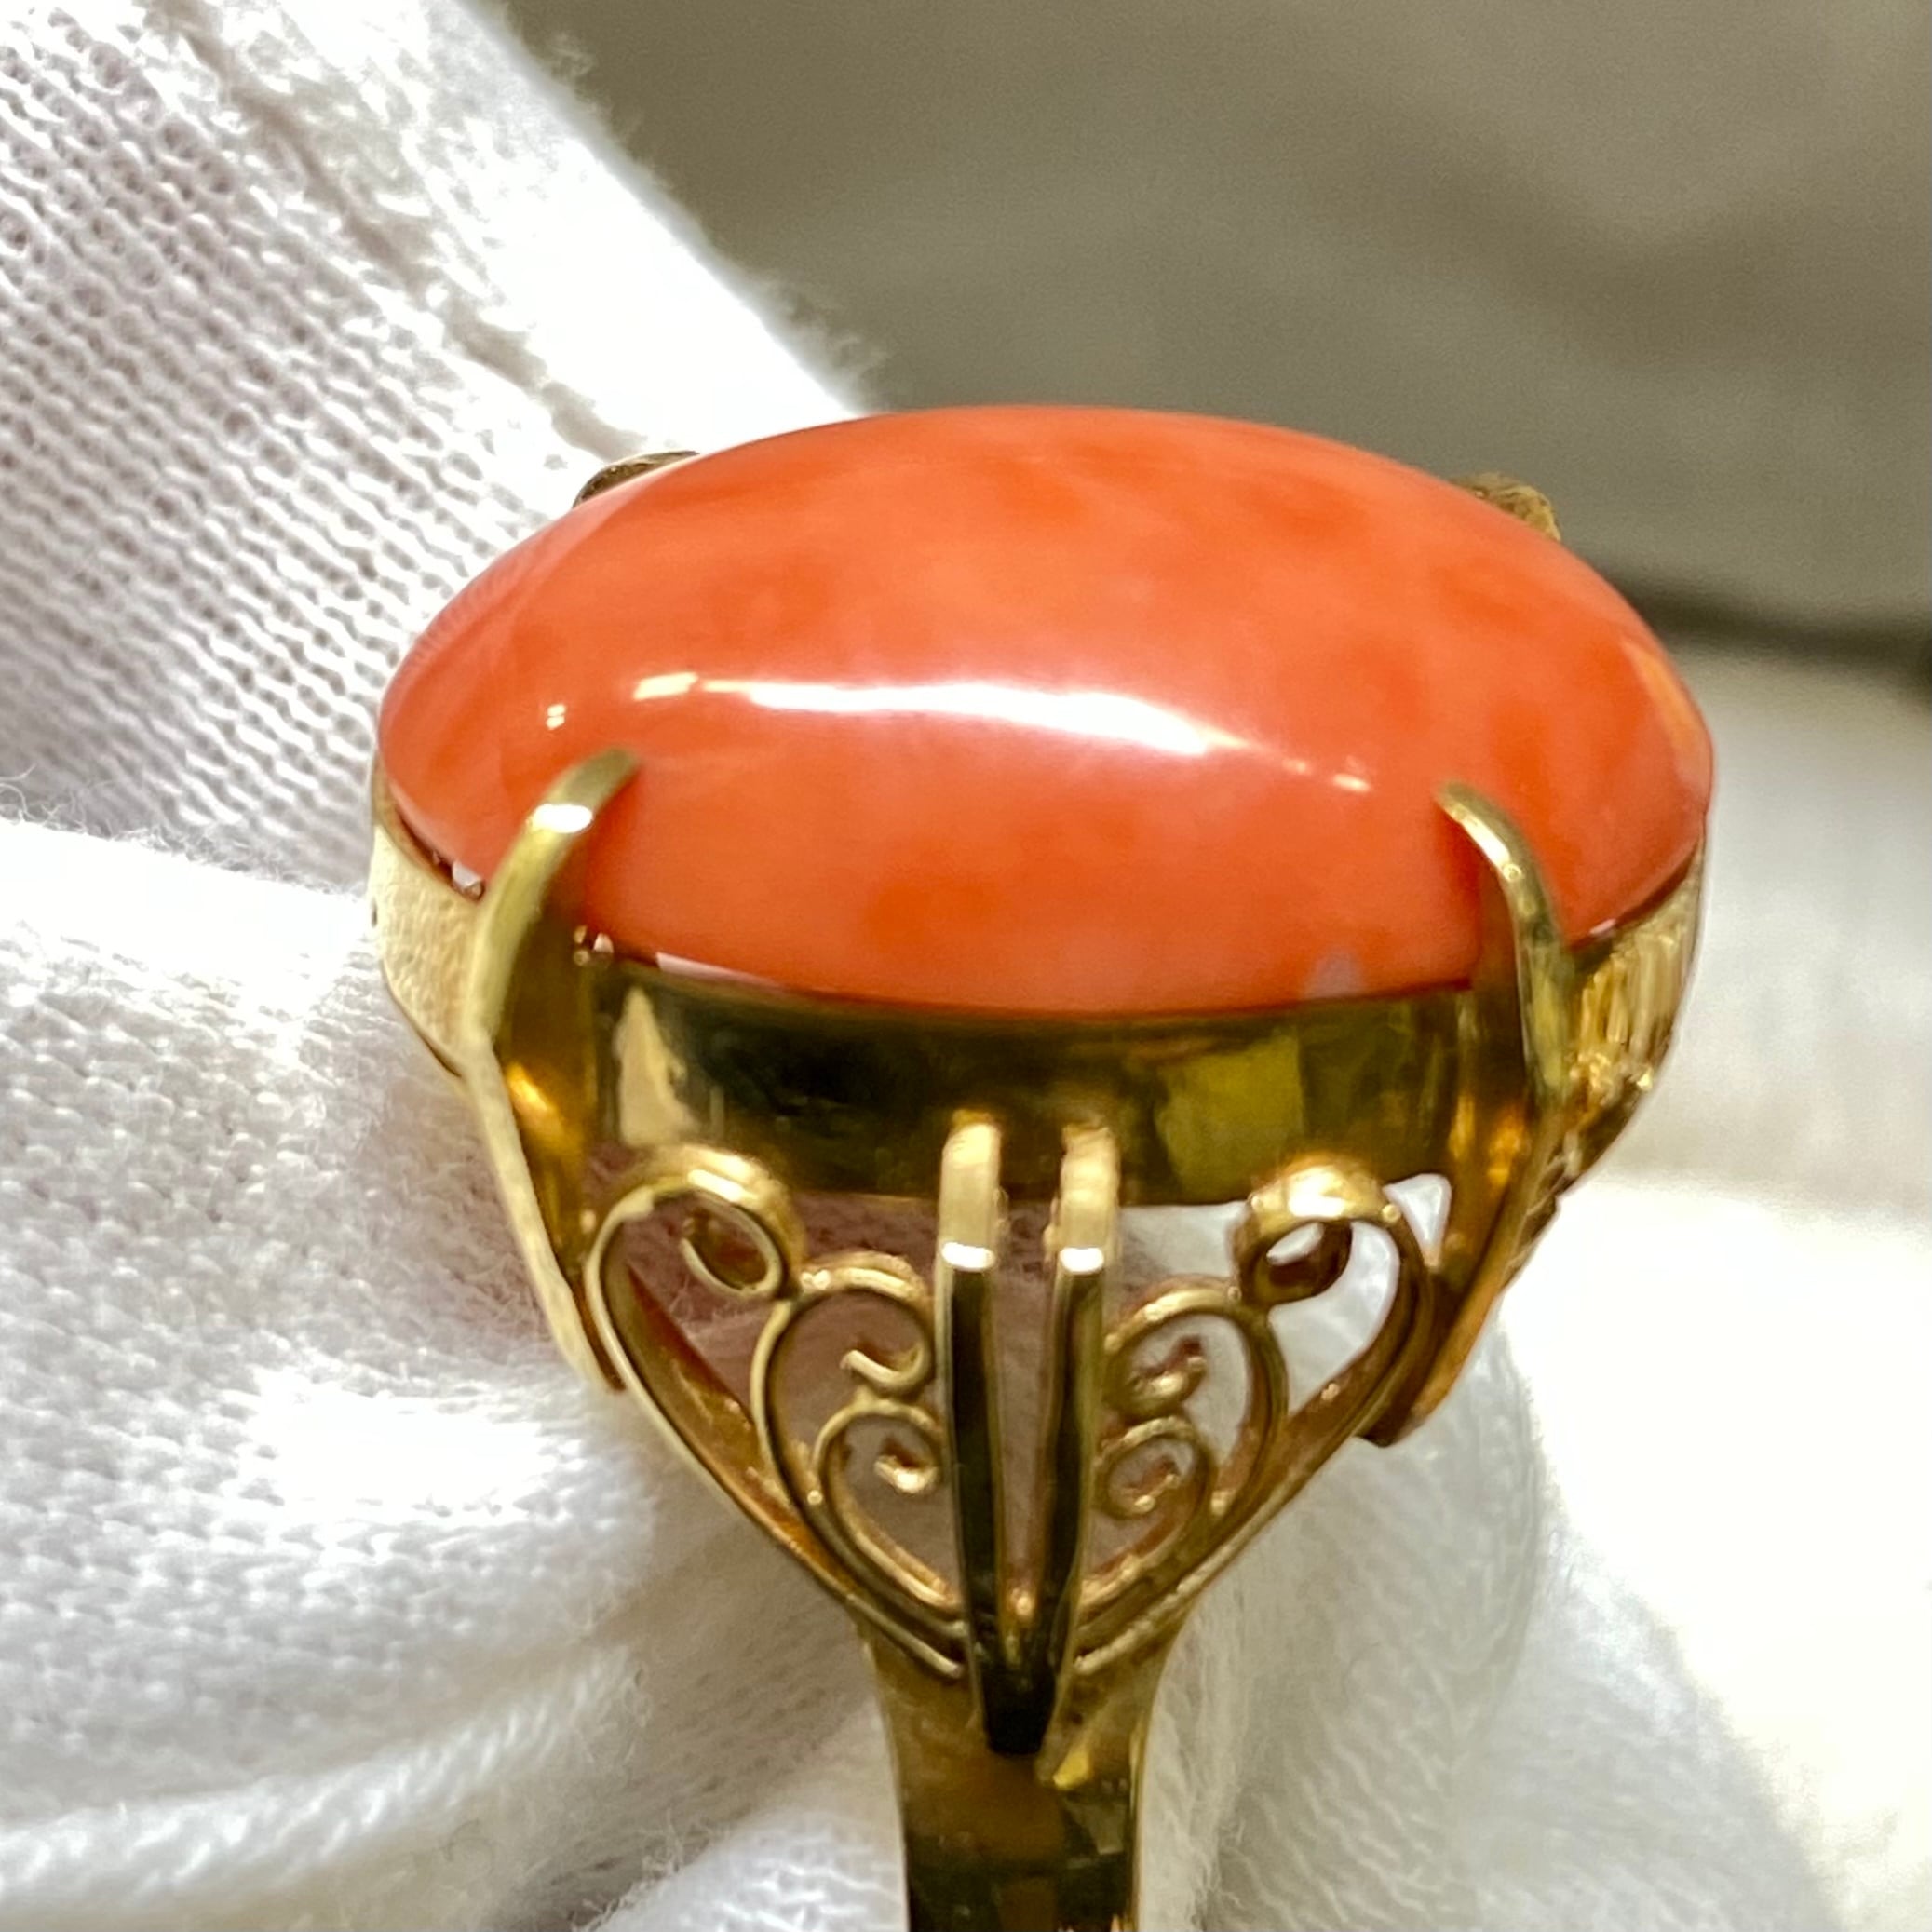 Japanese traditional ring】✨大きなの桃色珊瑚の昭和レトロリング